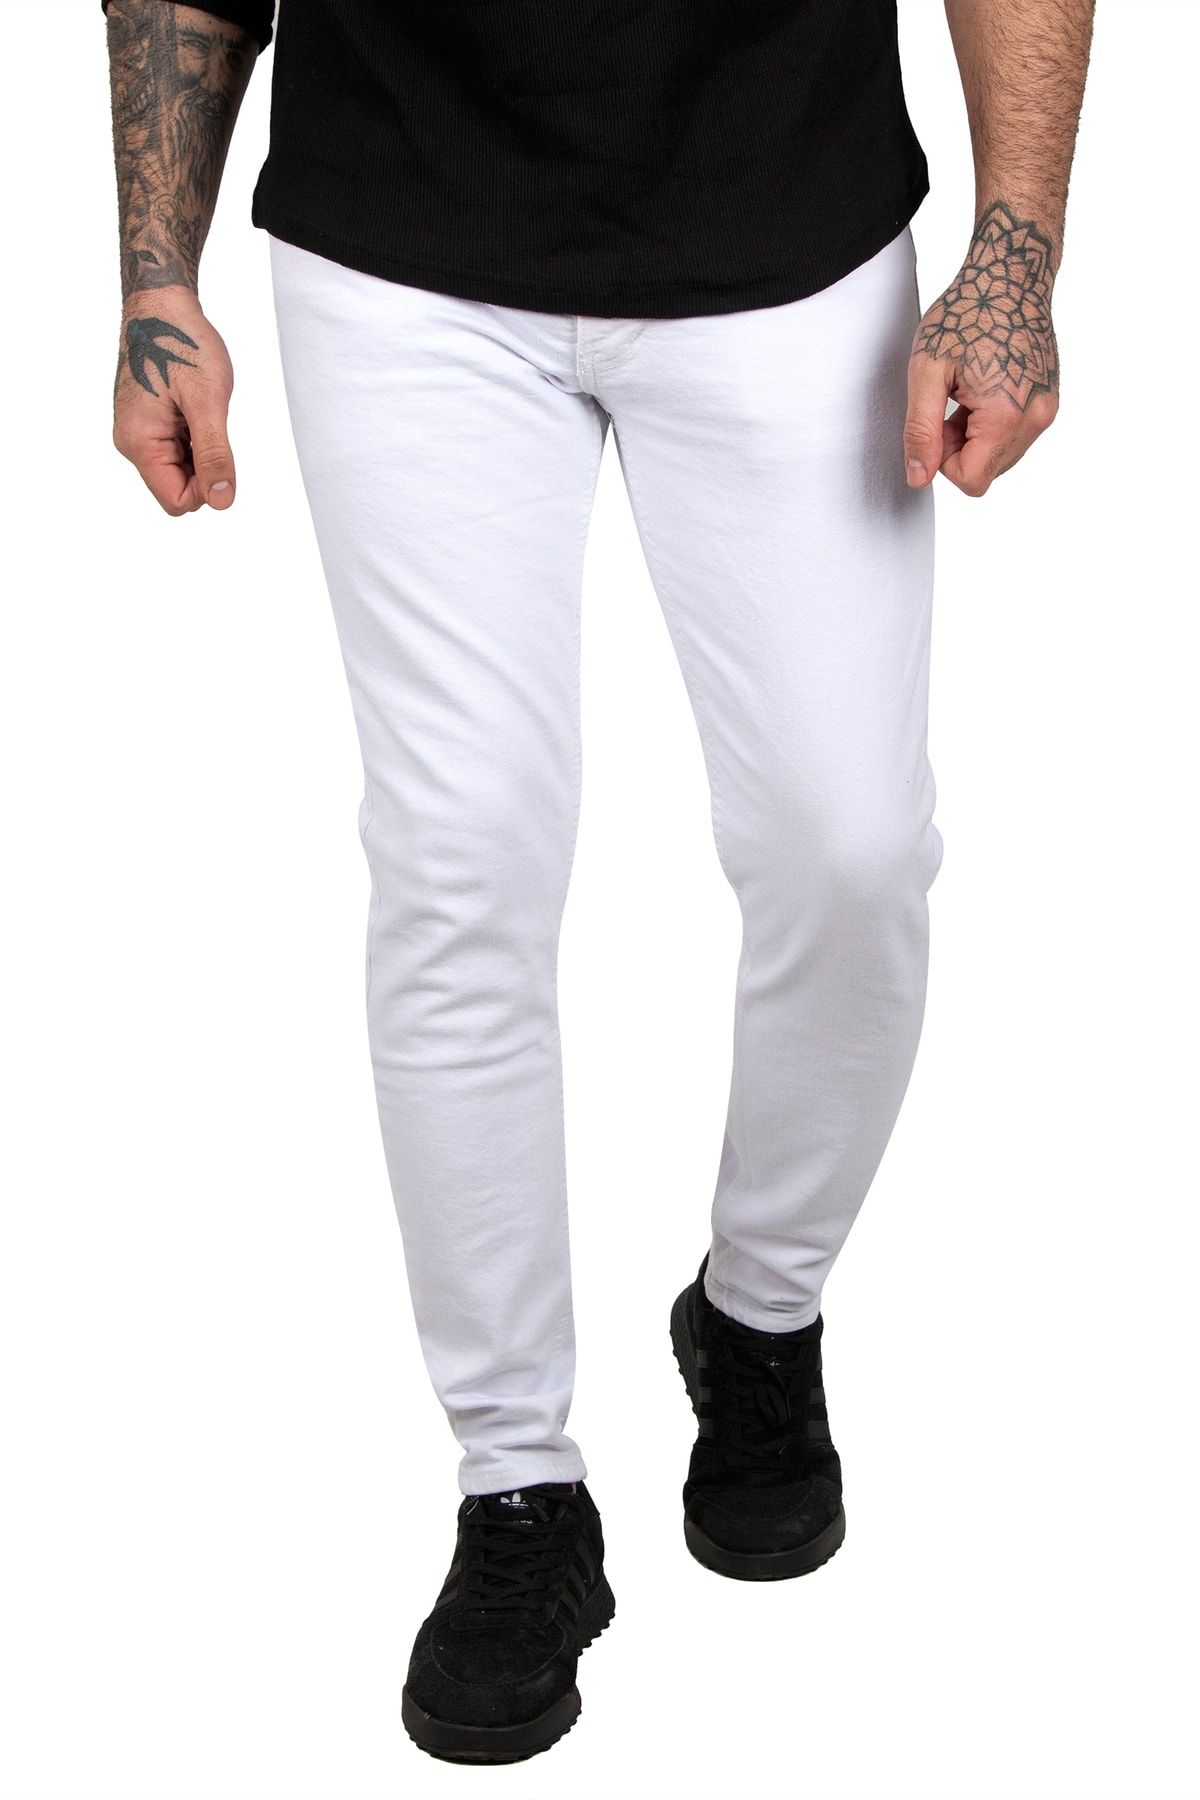 DeepSea Beyaz Skinny Fit-Ultra Dar Kesim Erkek Kot Pantolon 2004157